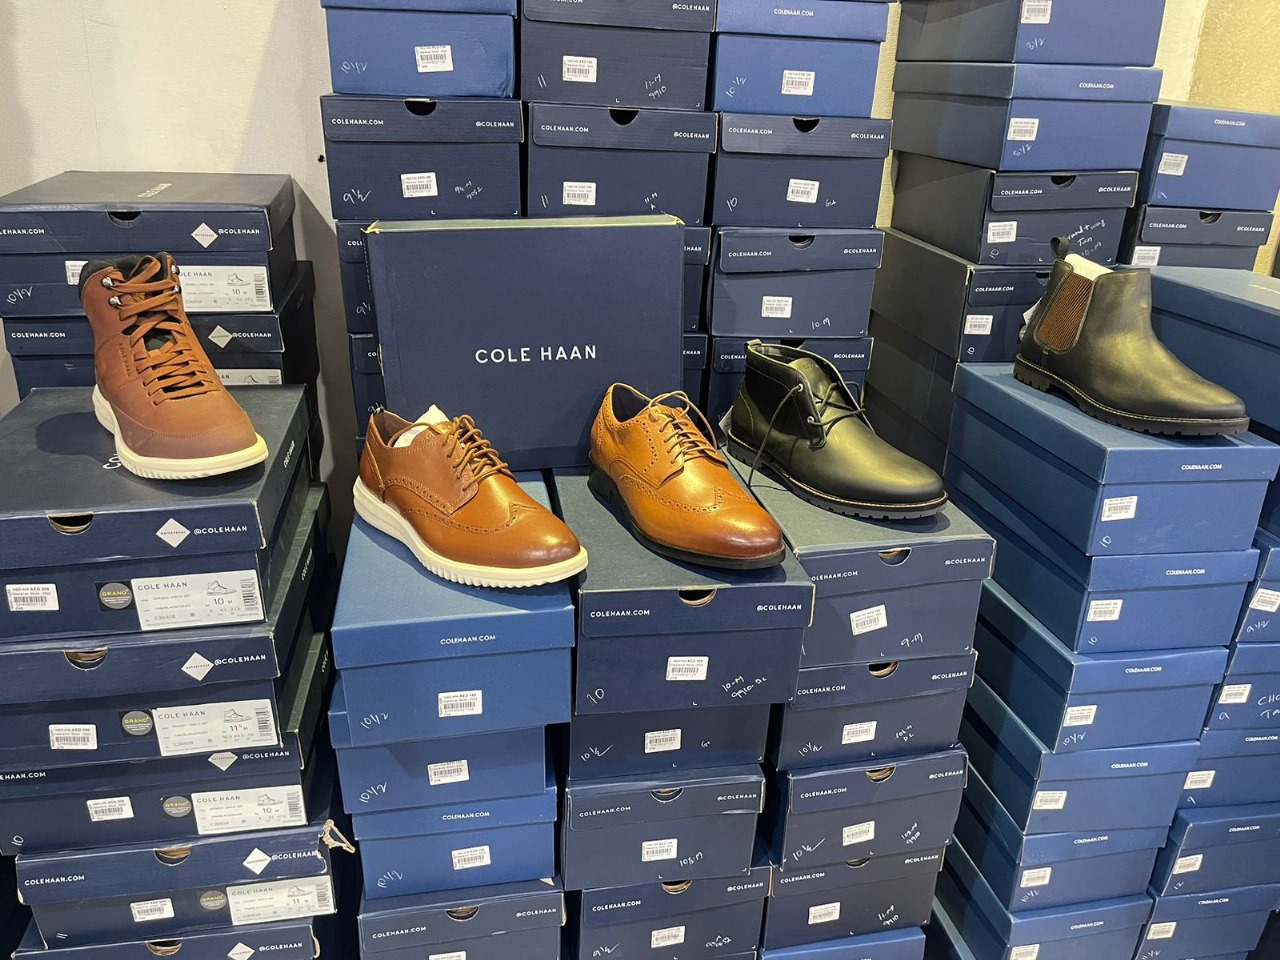 Wholesale men's formal shoes different styles different colors